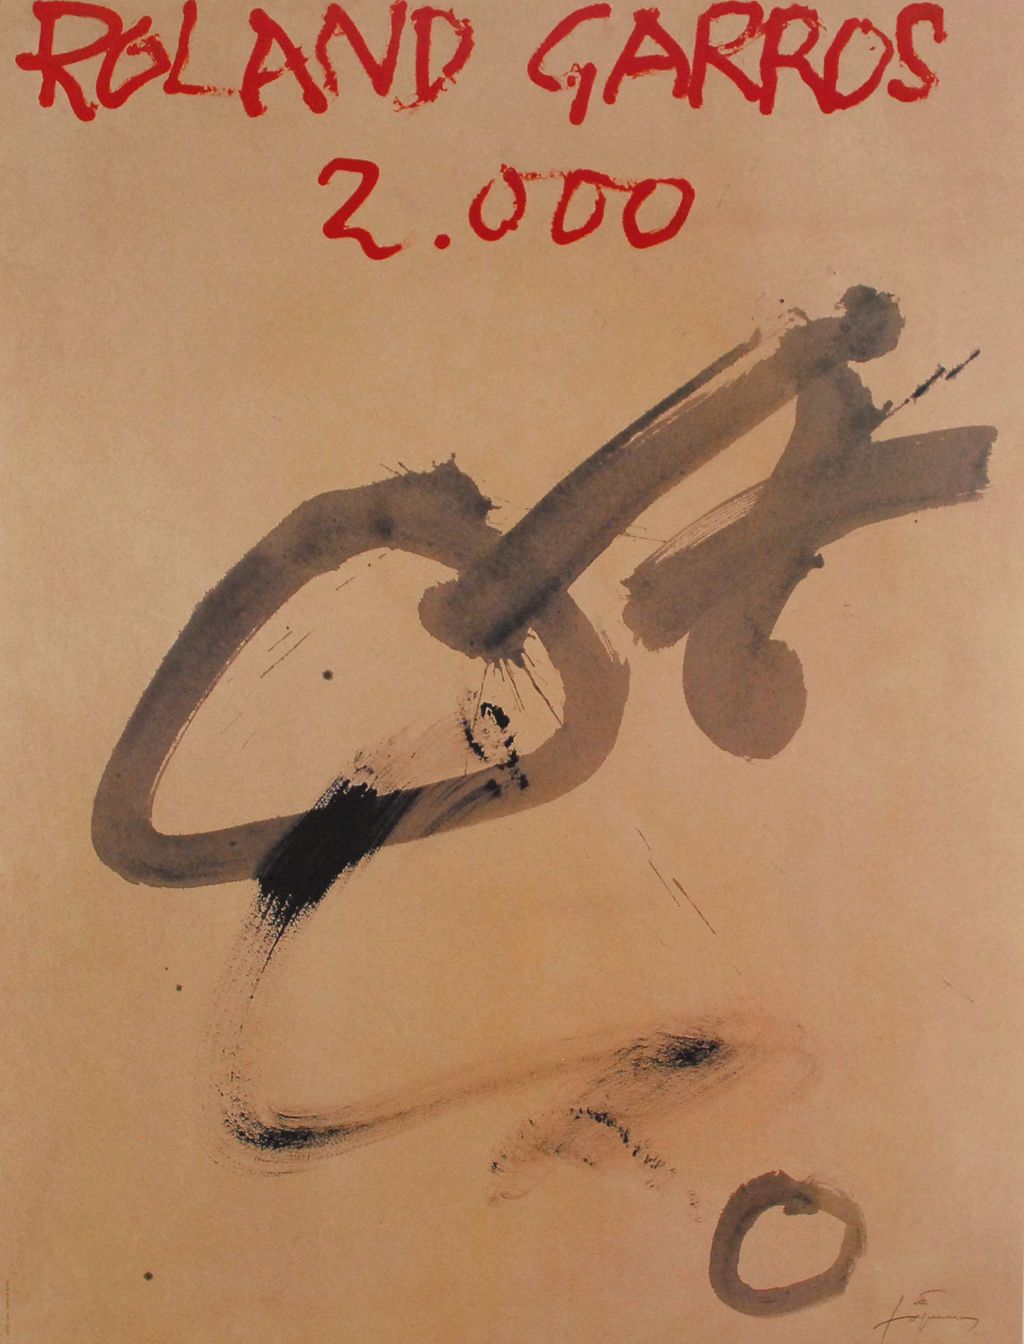 Antoni TAPIES 安东尼-塔皮斯 (1923 - 2012)

罗兰-加洛斯，2000年

由Galerie Lelong出版的胶印海报

右下角的盘&hellip;